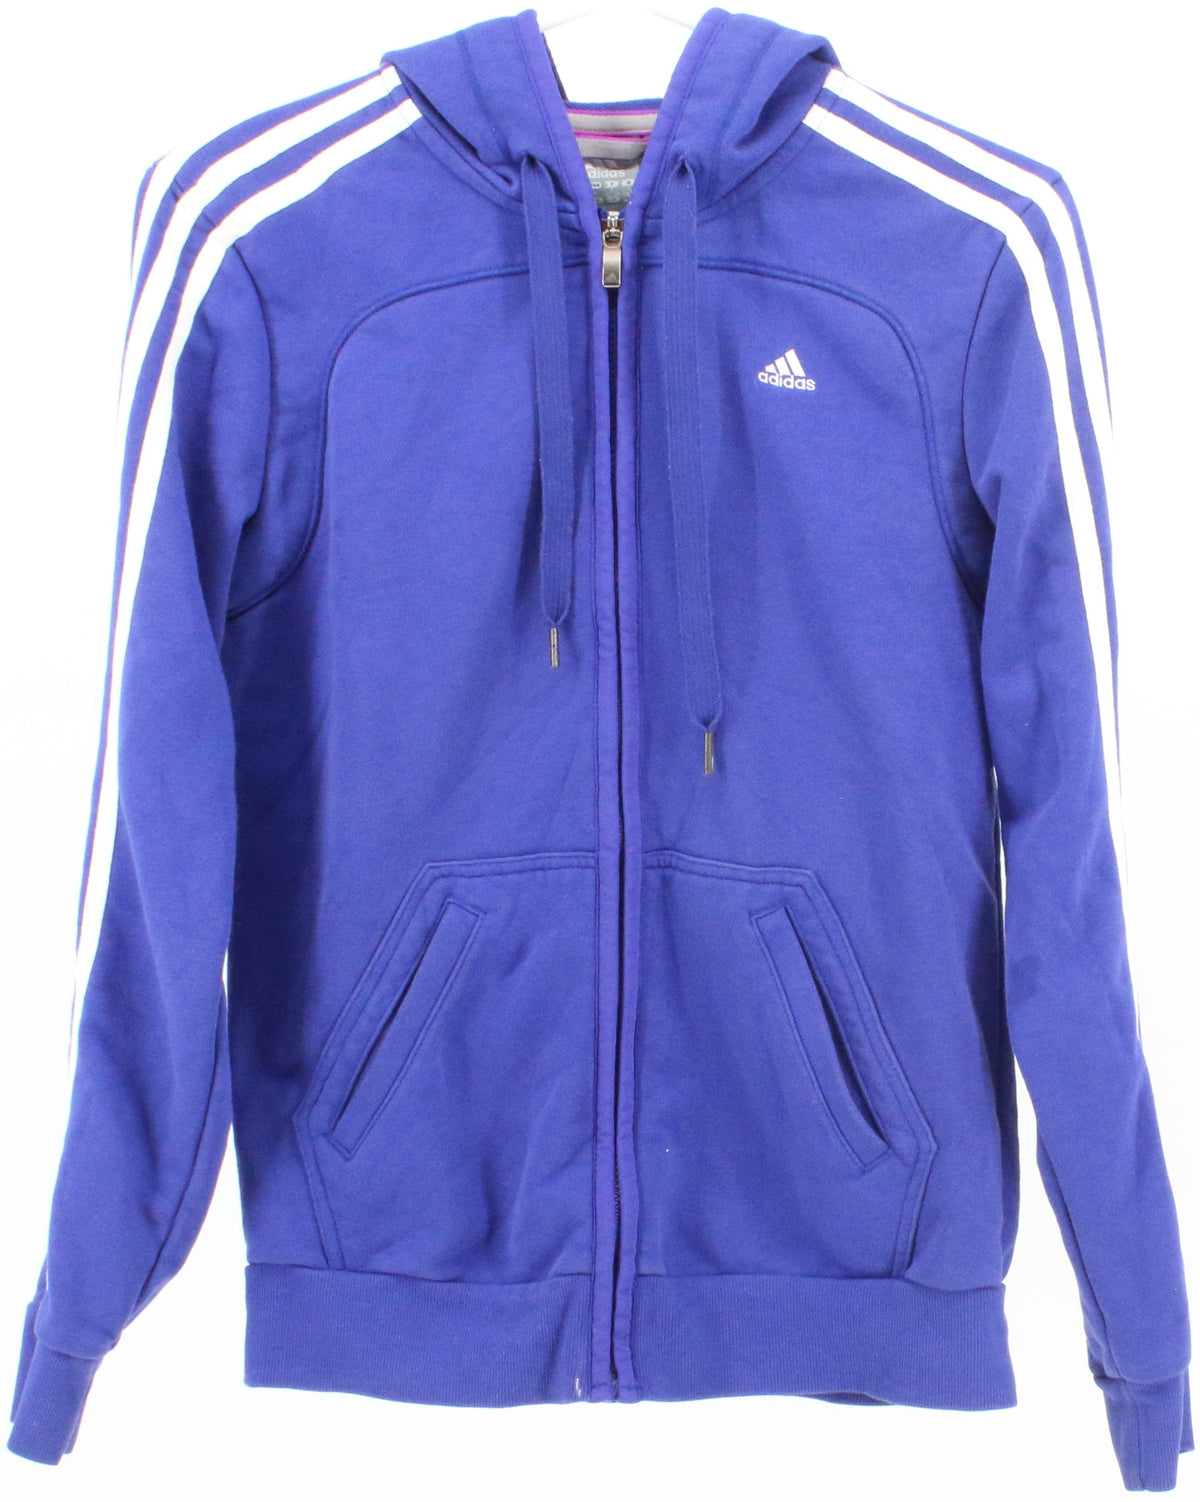 Adidas Blue With White Stripes Full Zip Hooded Sweatshirt